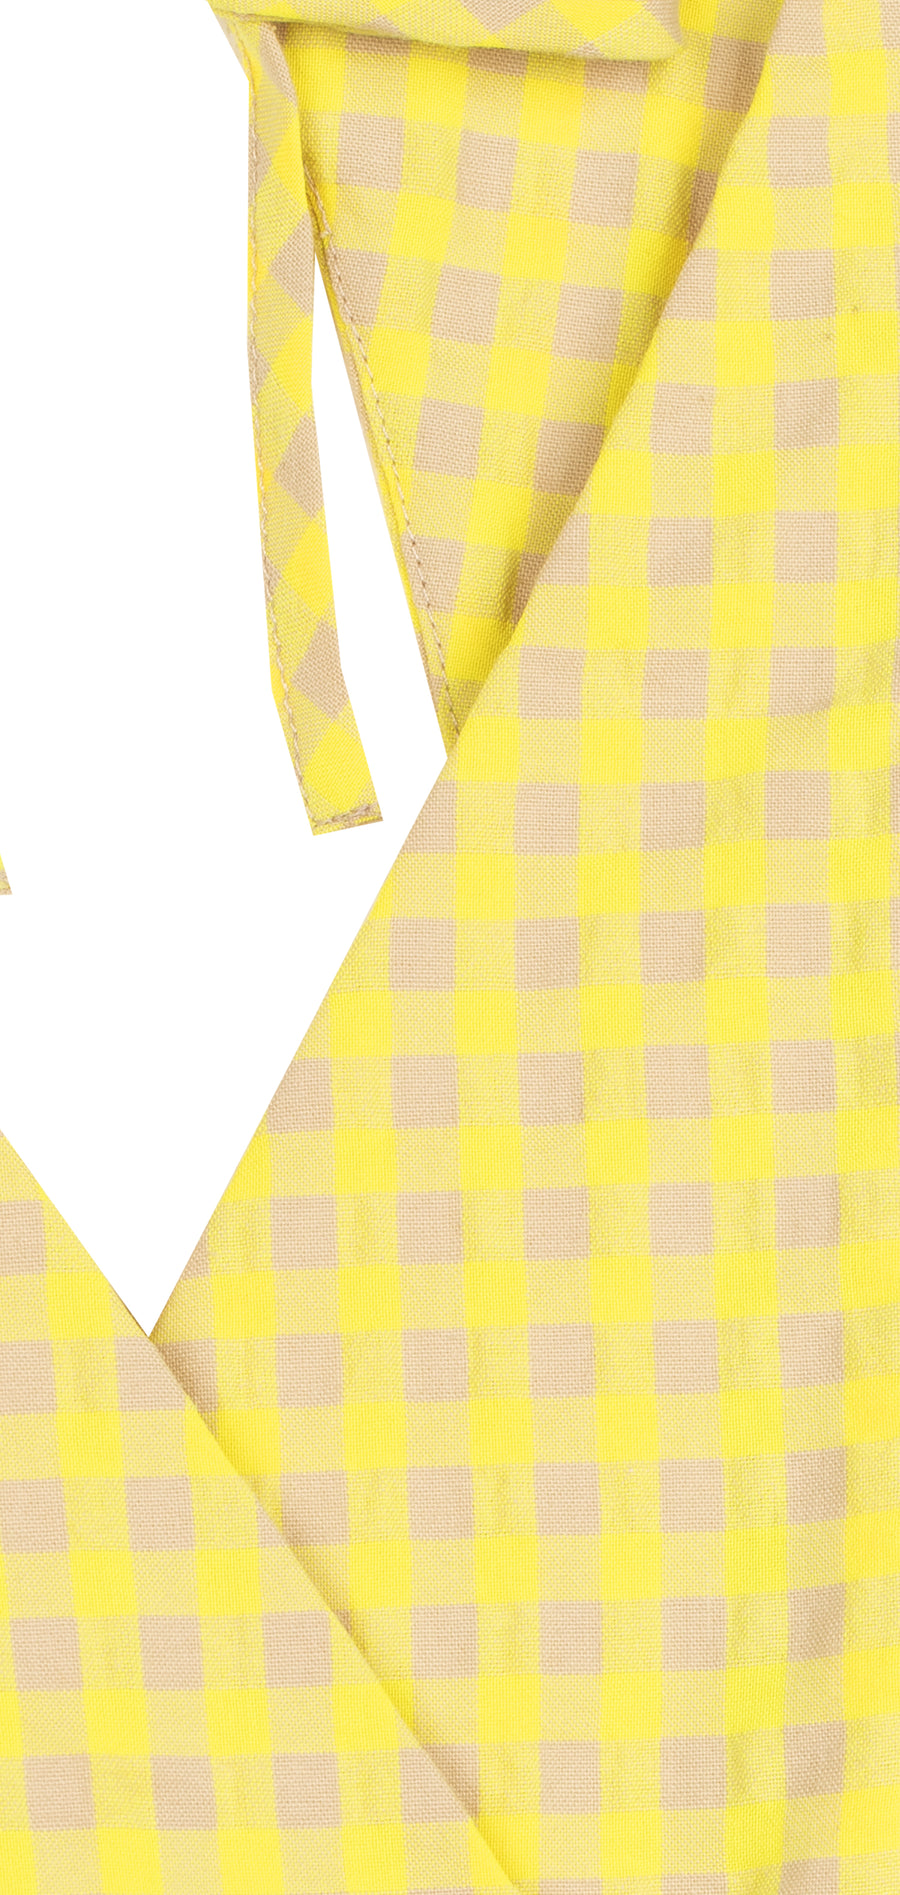 Mipounet - Caroline vichy dress - yellow